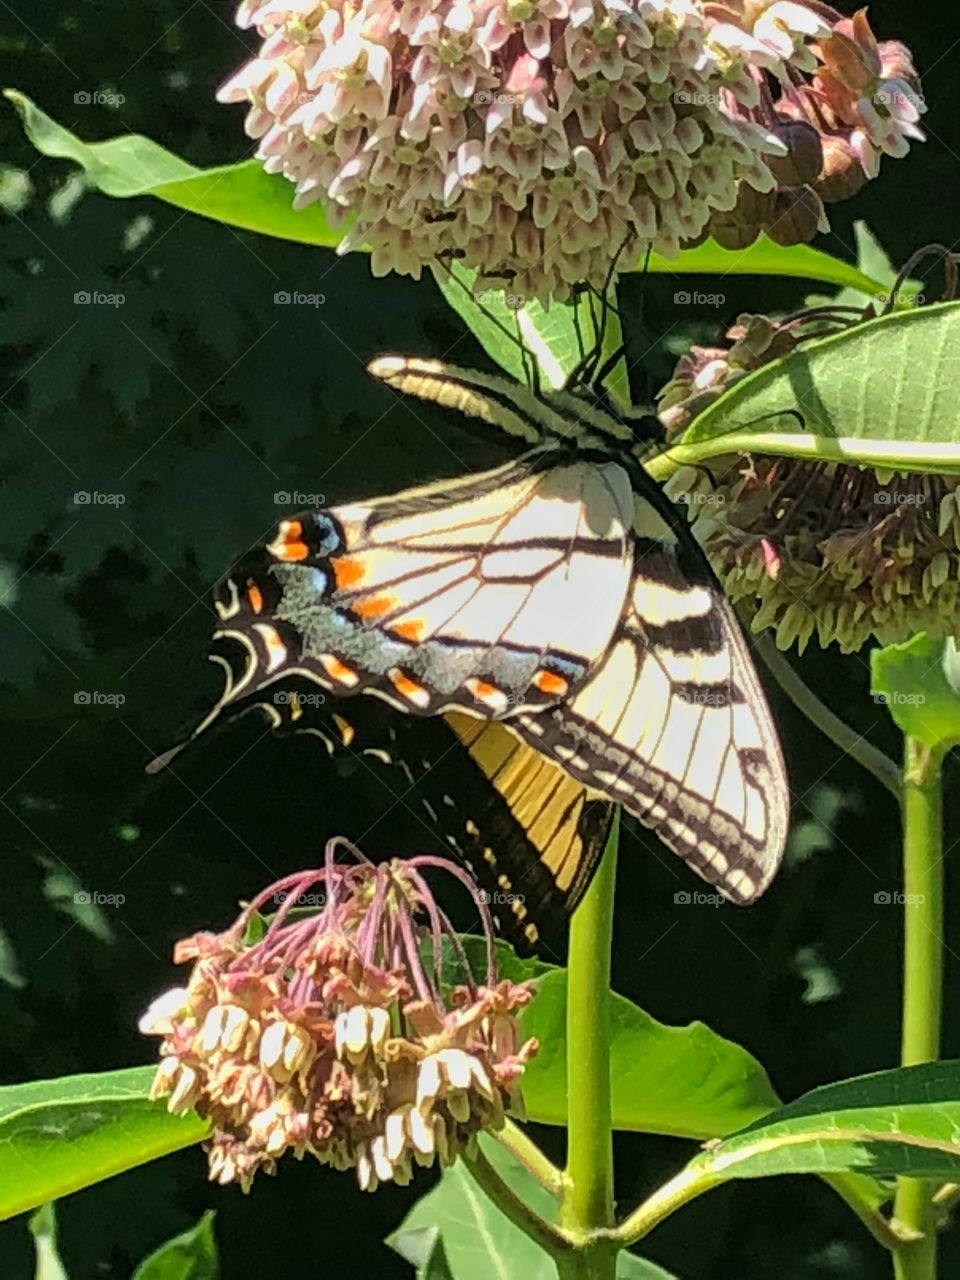 Swallowtail butterfly on milkweed plant